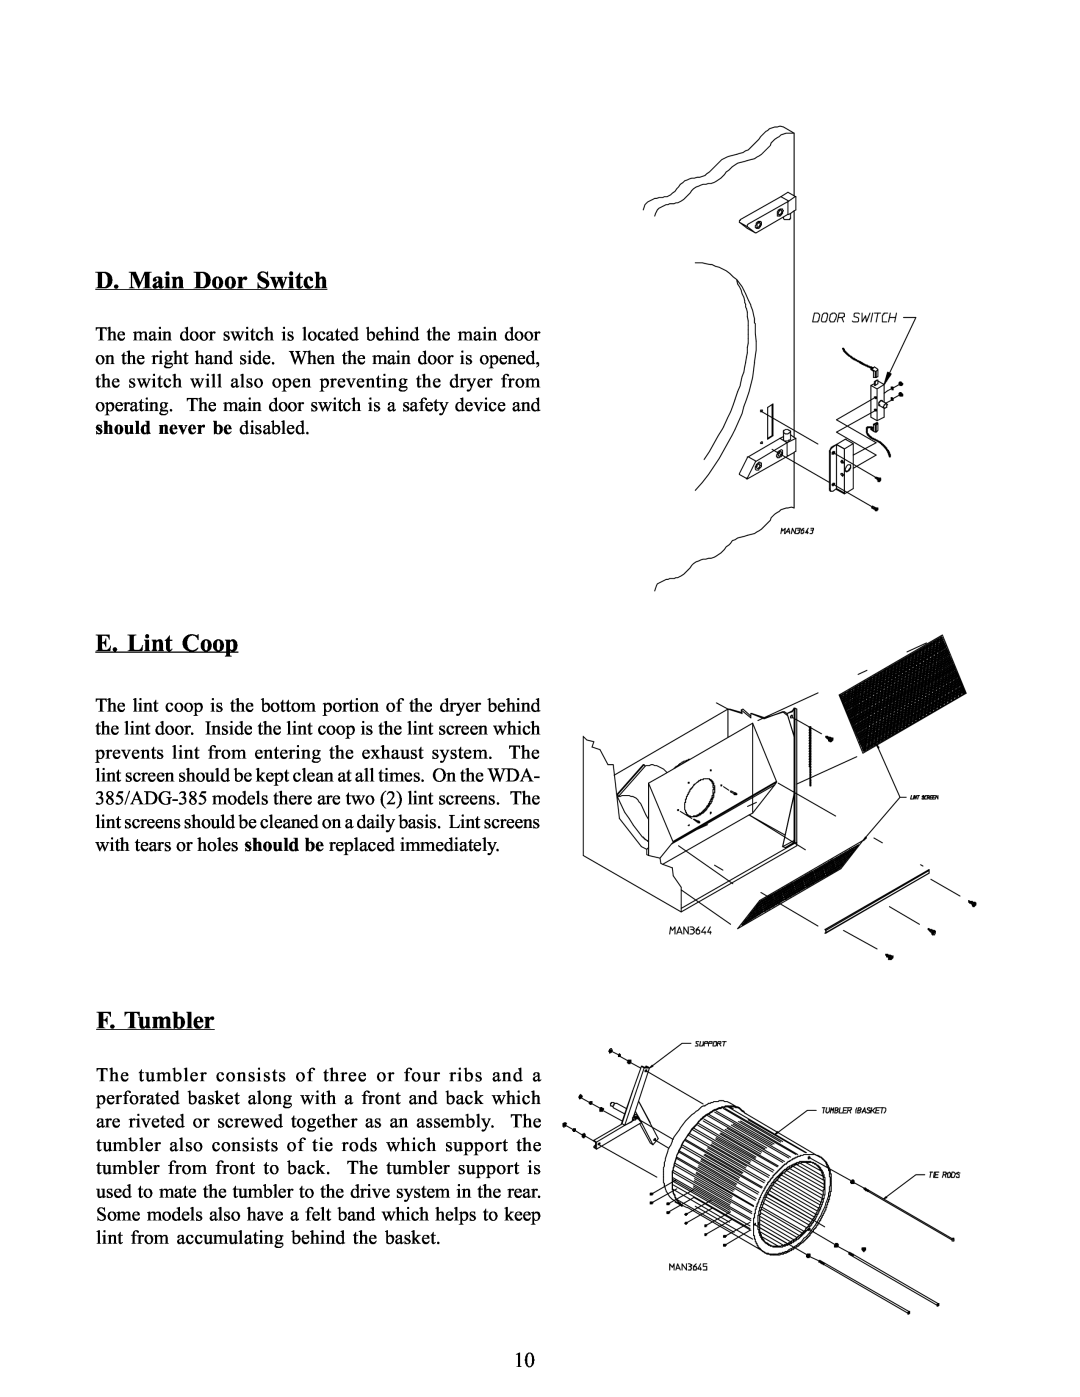 American Dryer Corp WDA-385 service manual D. Main Door Switch, E. Lint Coop, F. Tumbler 